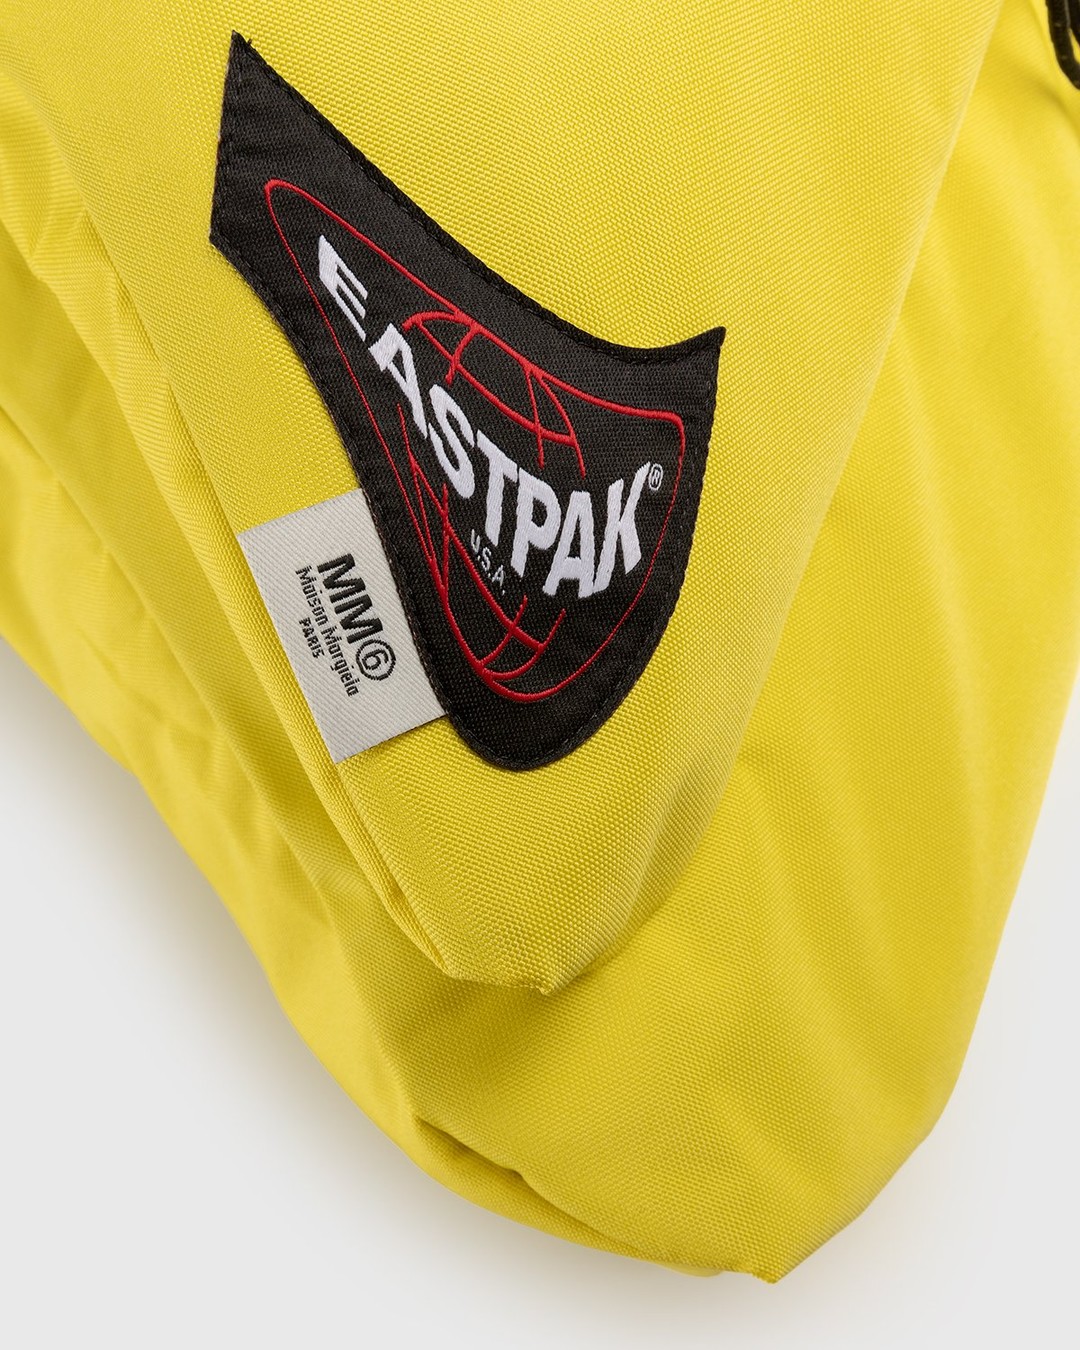 MM6 Maison Margiela x Eastpak – Zaino Backpack Yellow - Backpacks - Yellow - Image 3